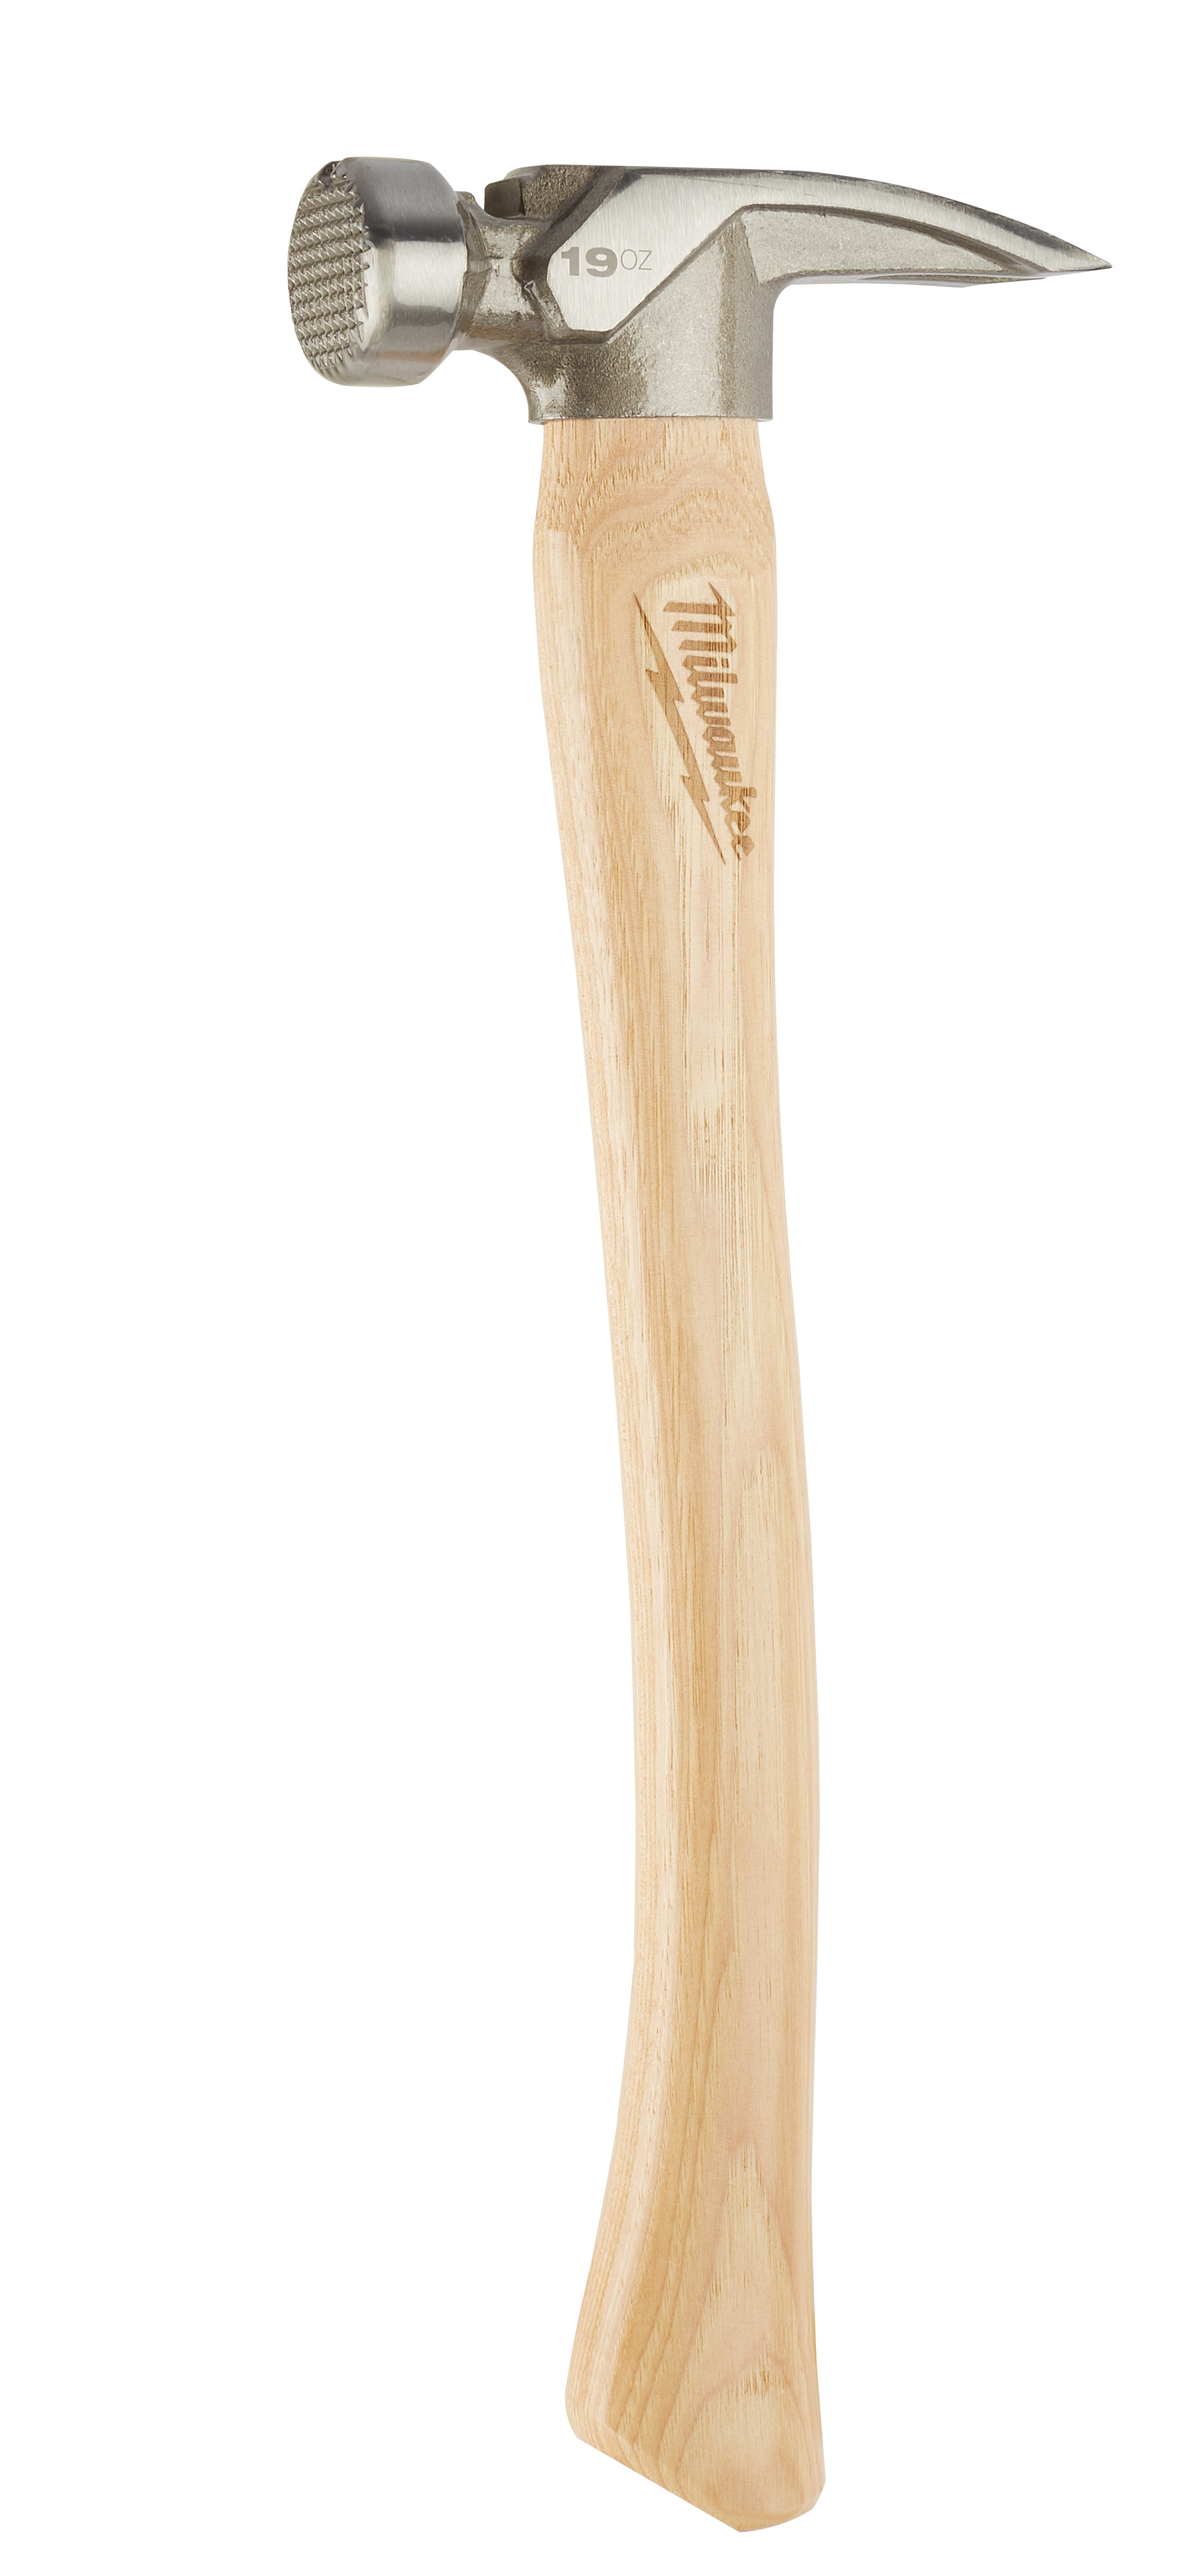 19oz Milled Face Hickory Wood Framing Hammer